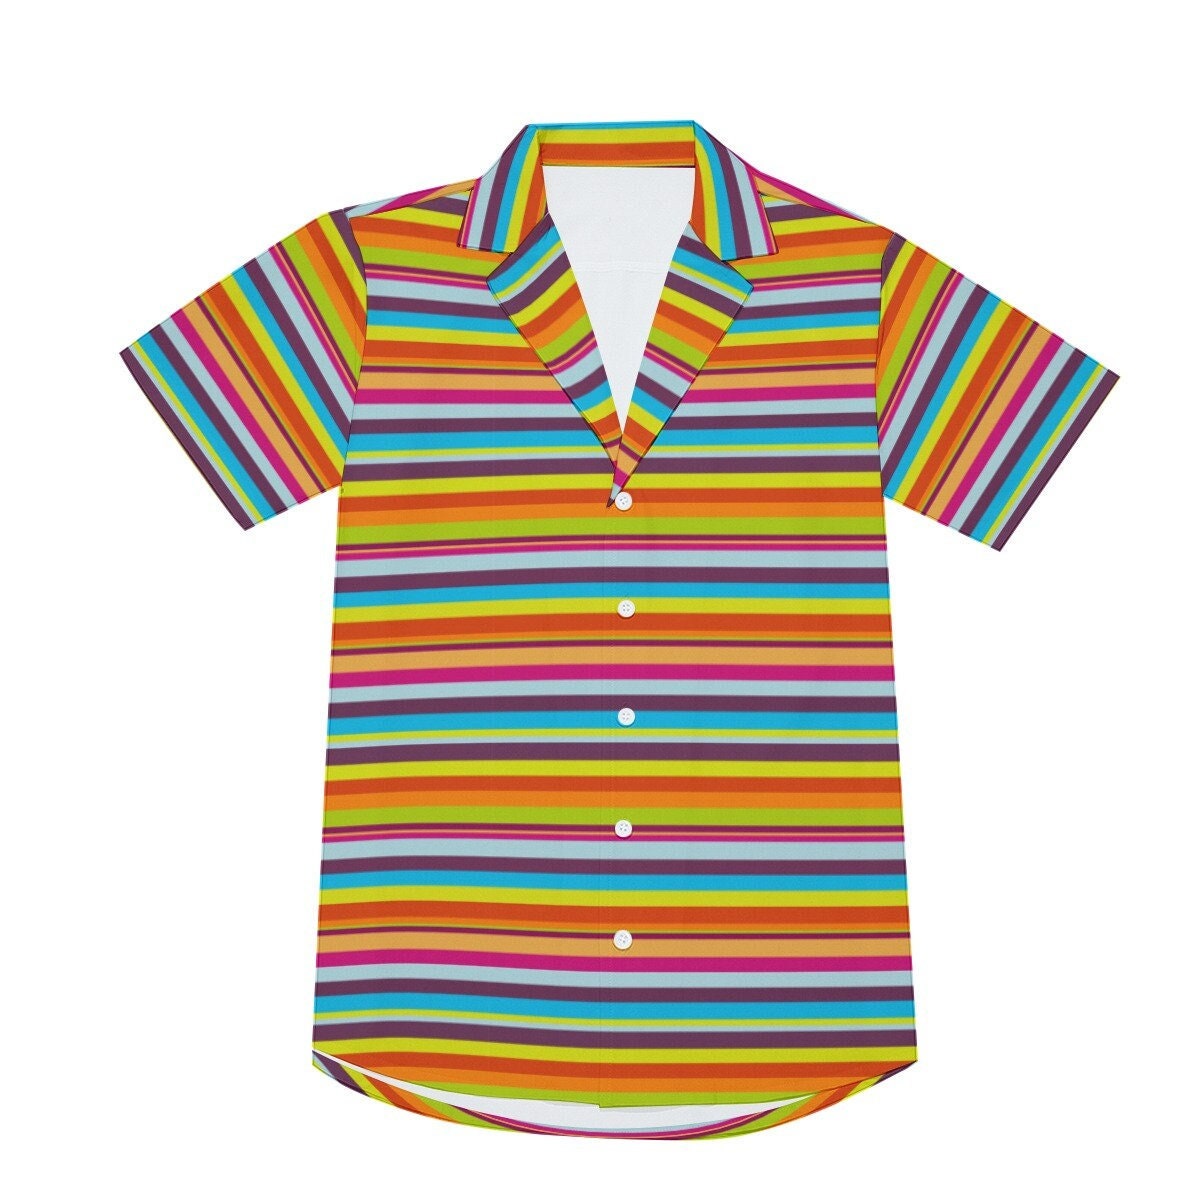 Stripe Shirt Men, Multicolor Shirt Men, 70s style Shirt, Hippie Shirt, Short Sleeve Shirt Men, Men's Tops, Rainbow Shirt, Men's Dress Shirt